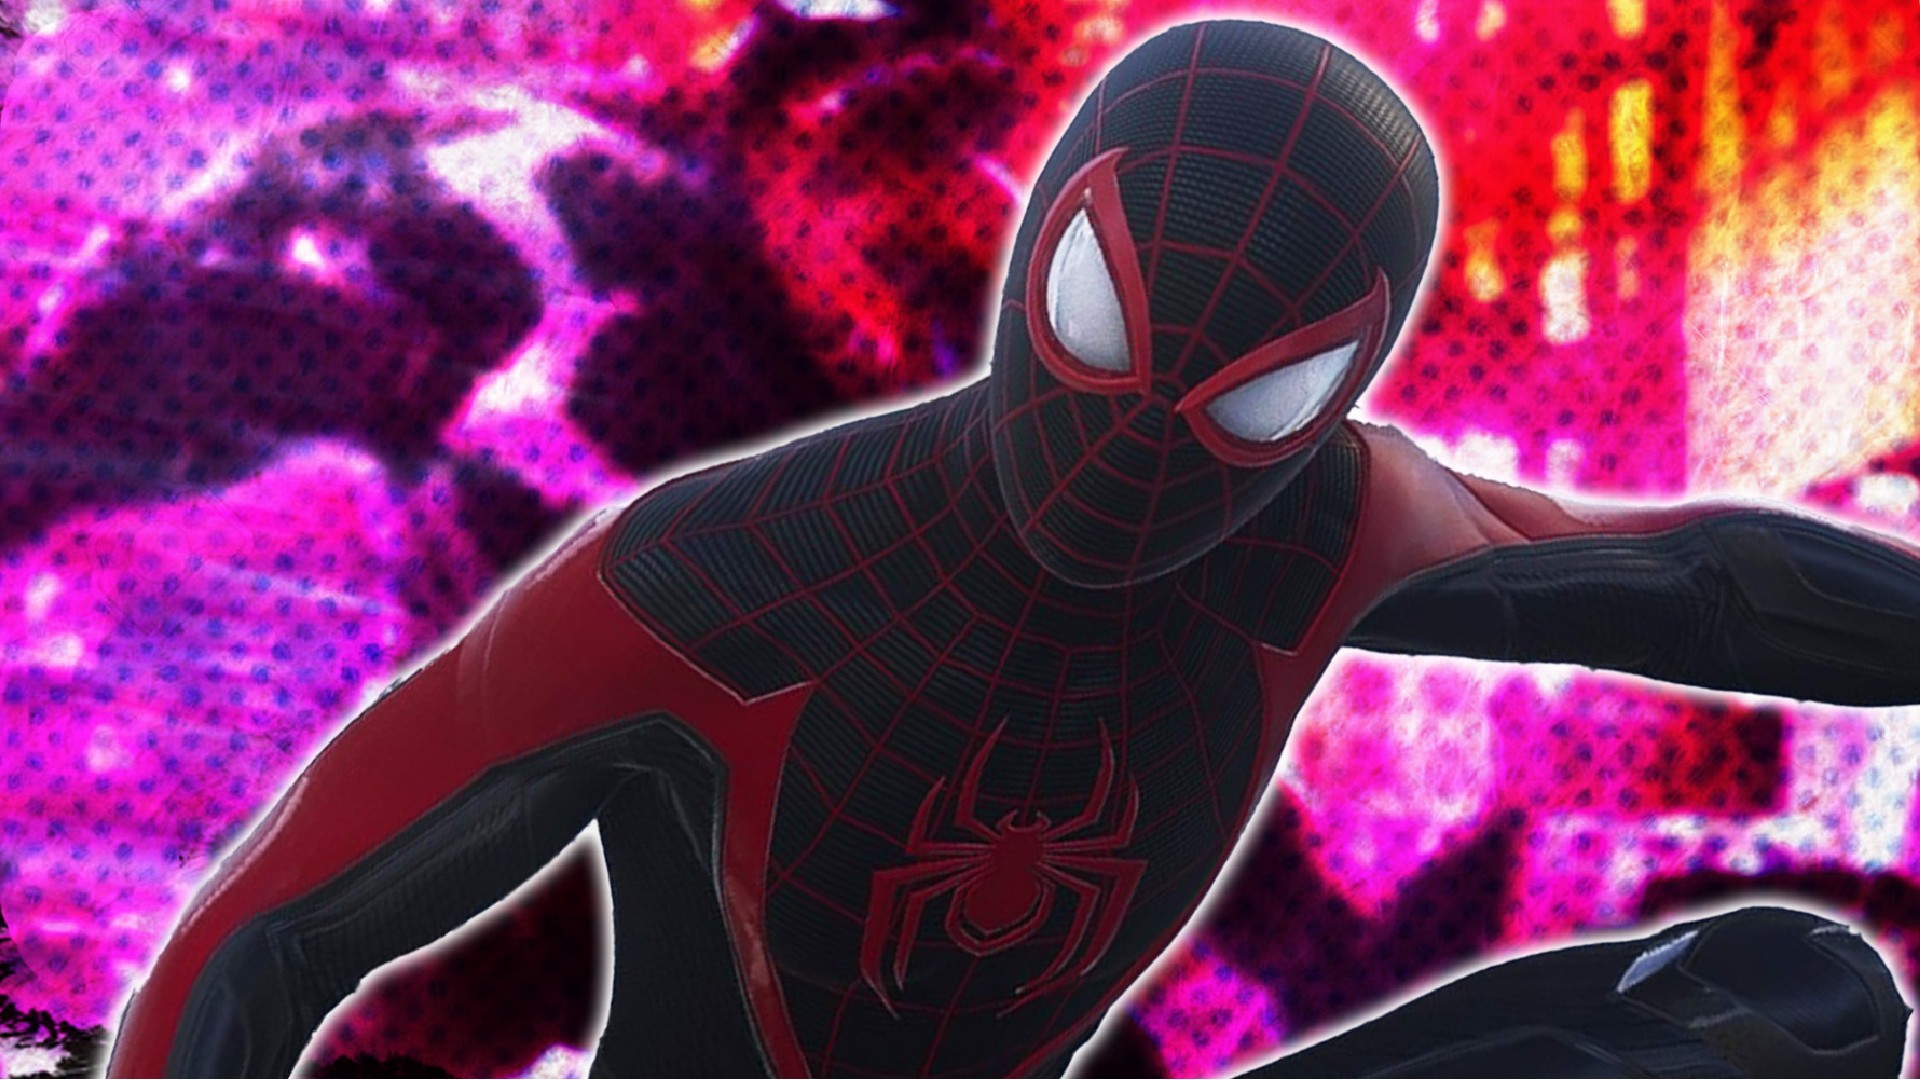 Spider-Man 2 (video game), Marvel Database